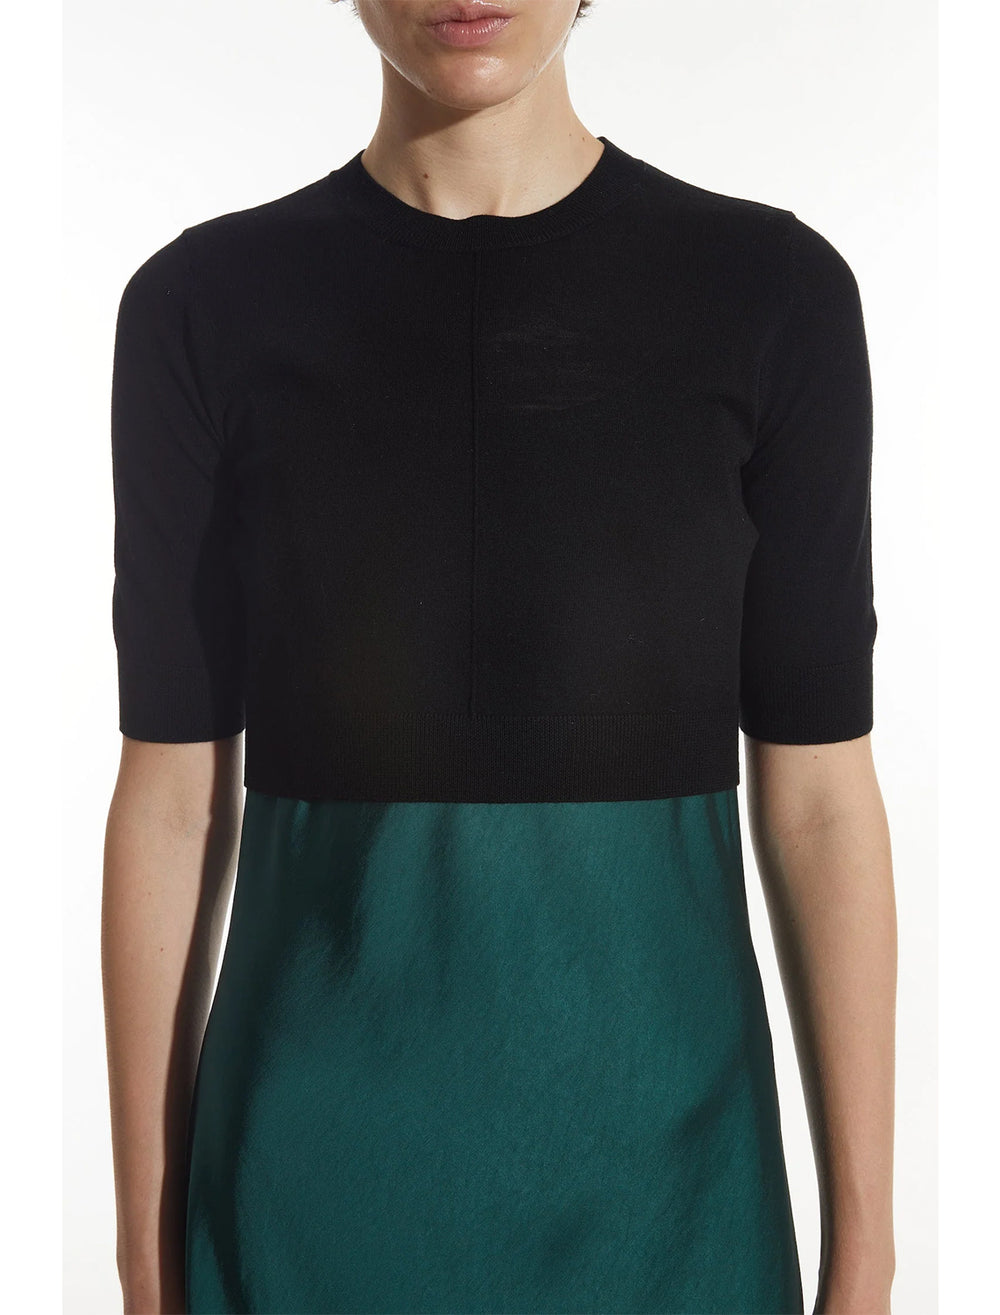 Model wearing Saint Art's norah cropped short sleeve sweater in black.